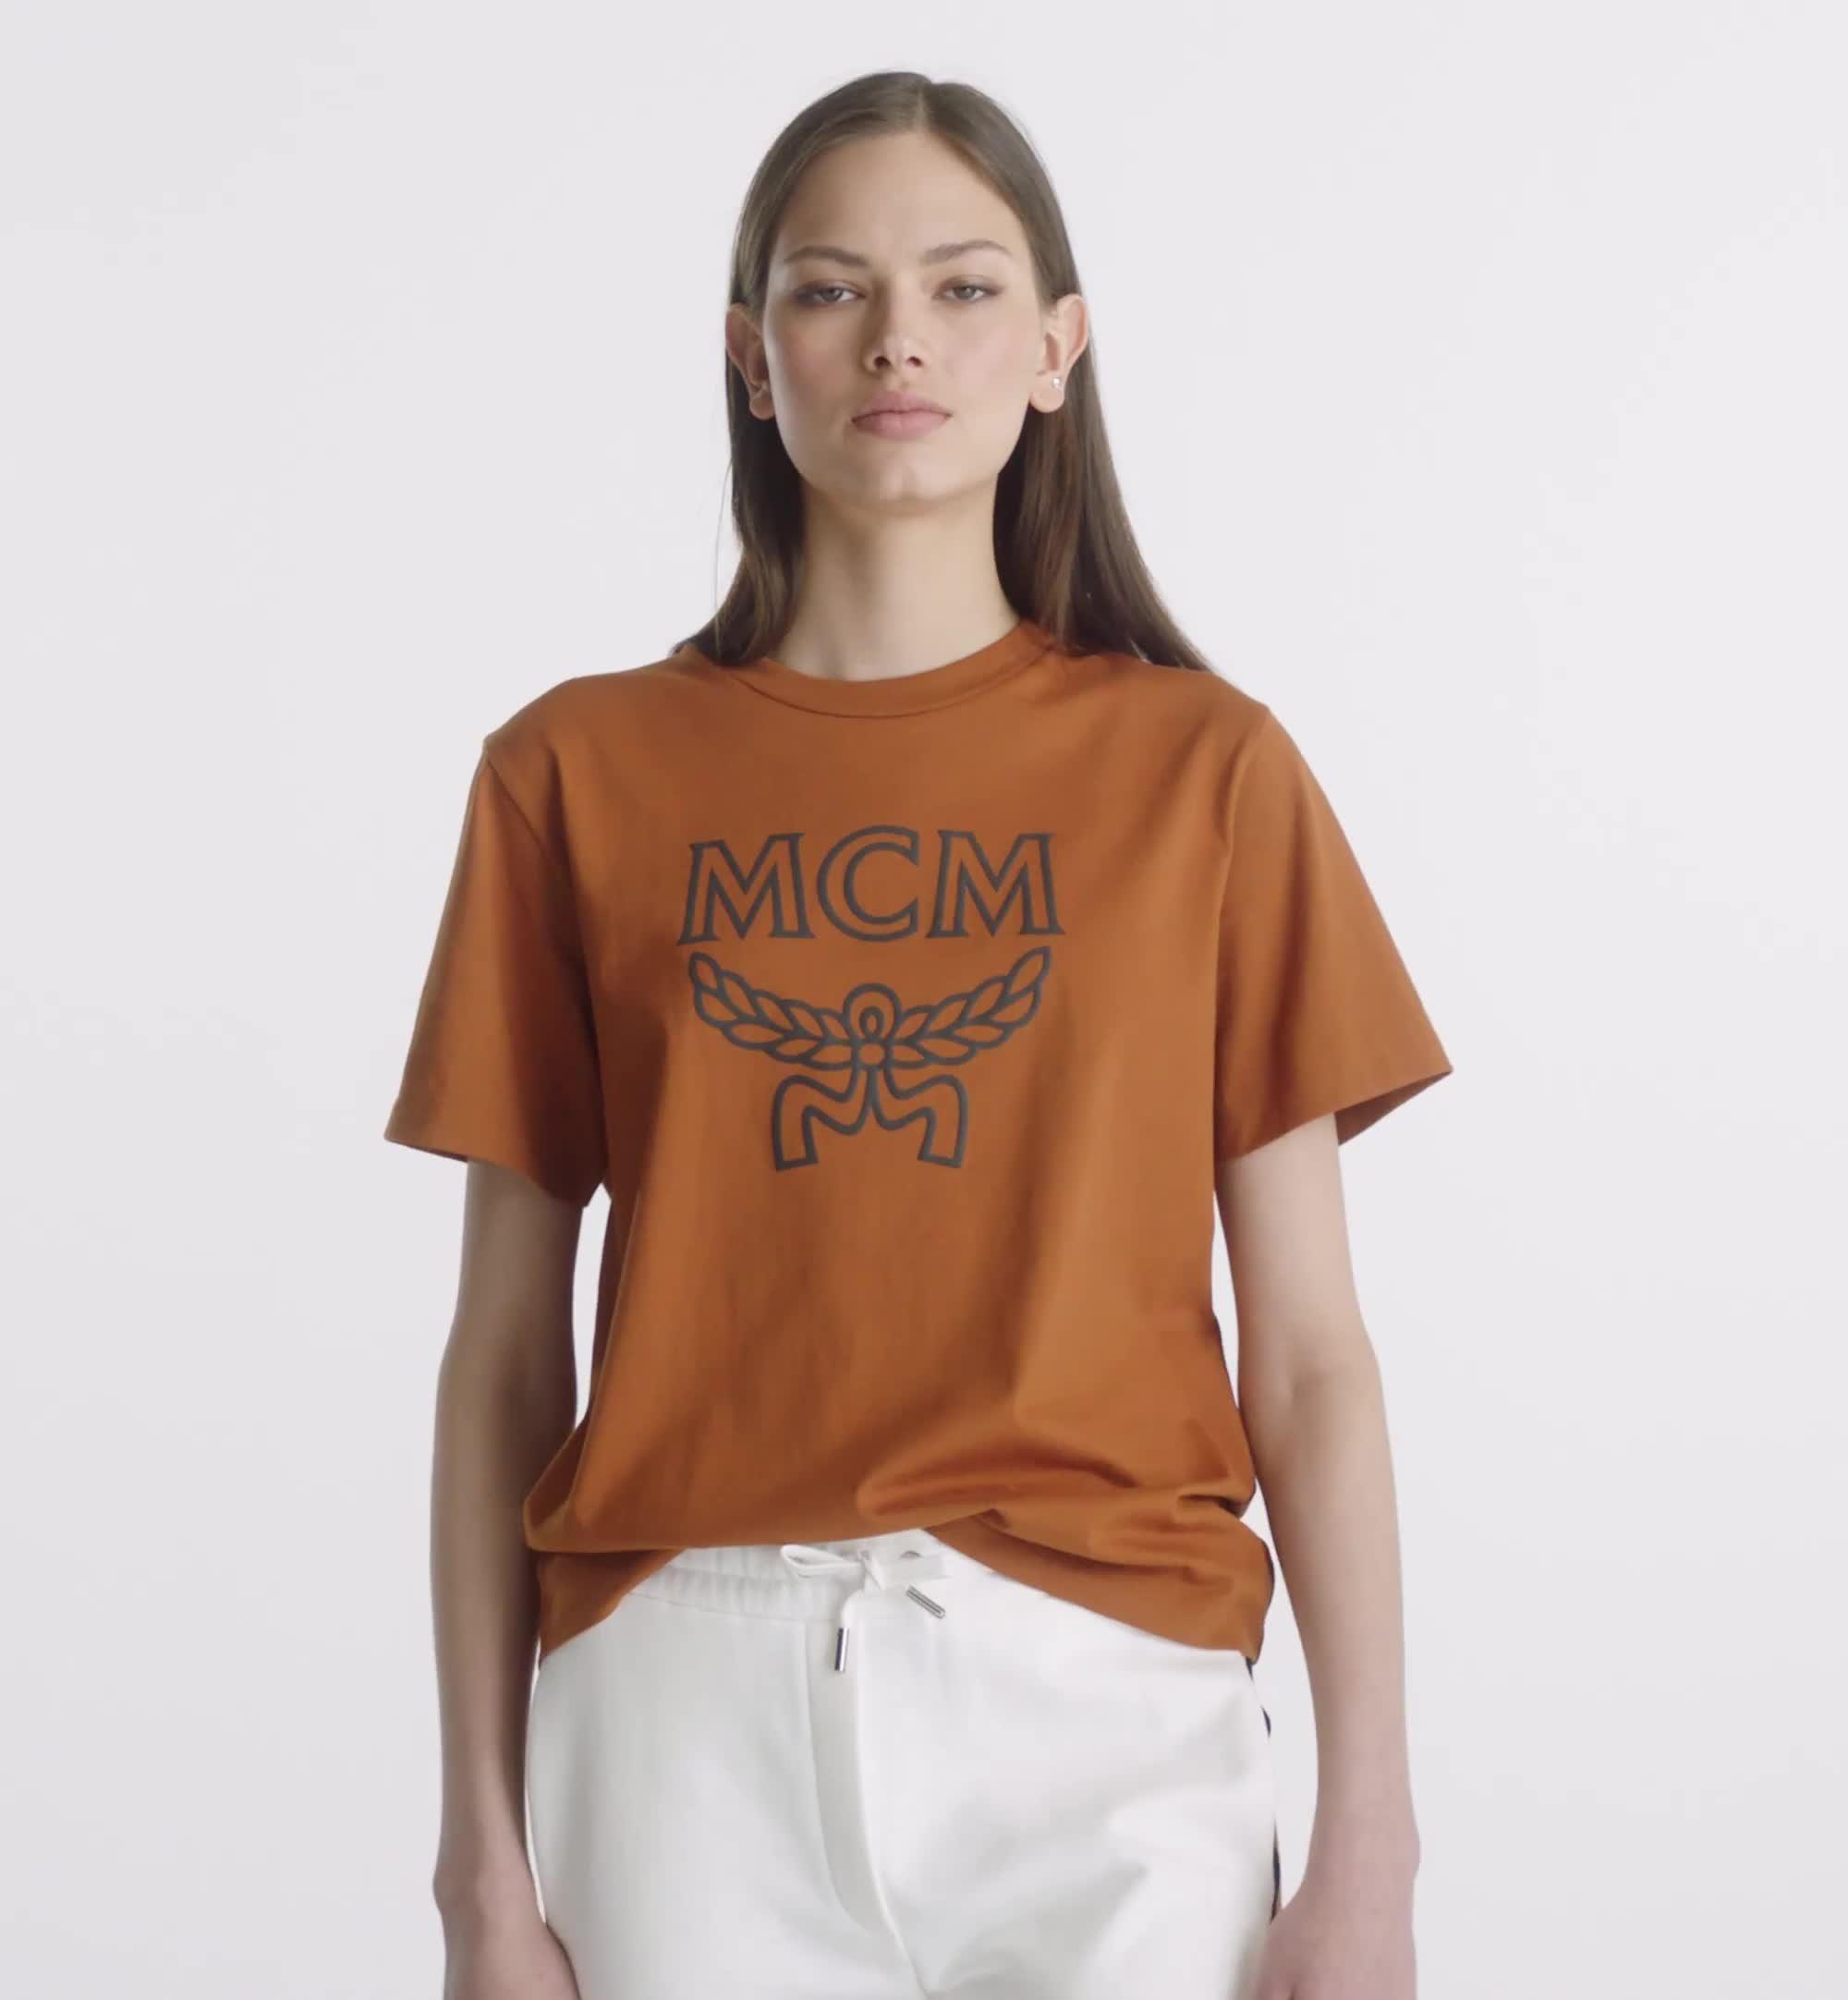 Mcm Women's Cotton Crew-Neck T-Shirt - Brown - T-shirts